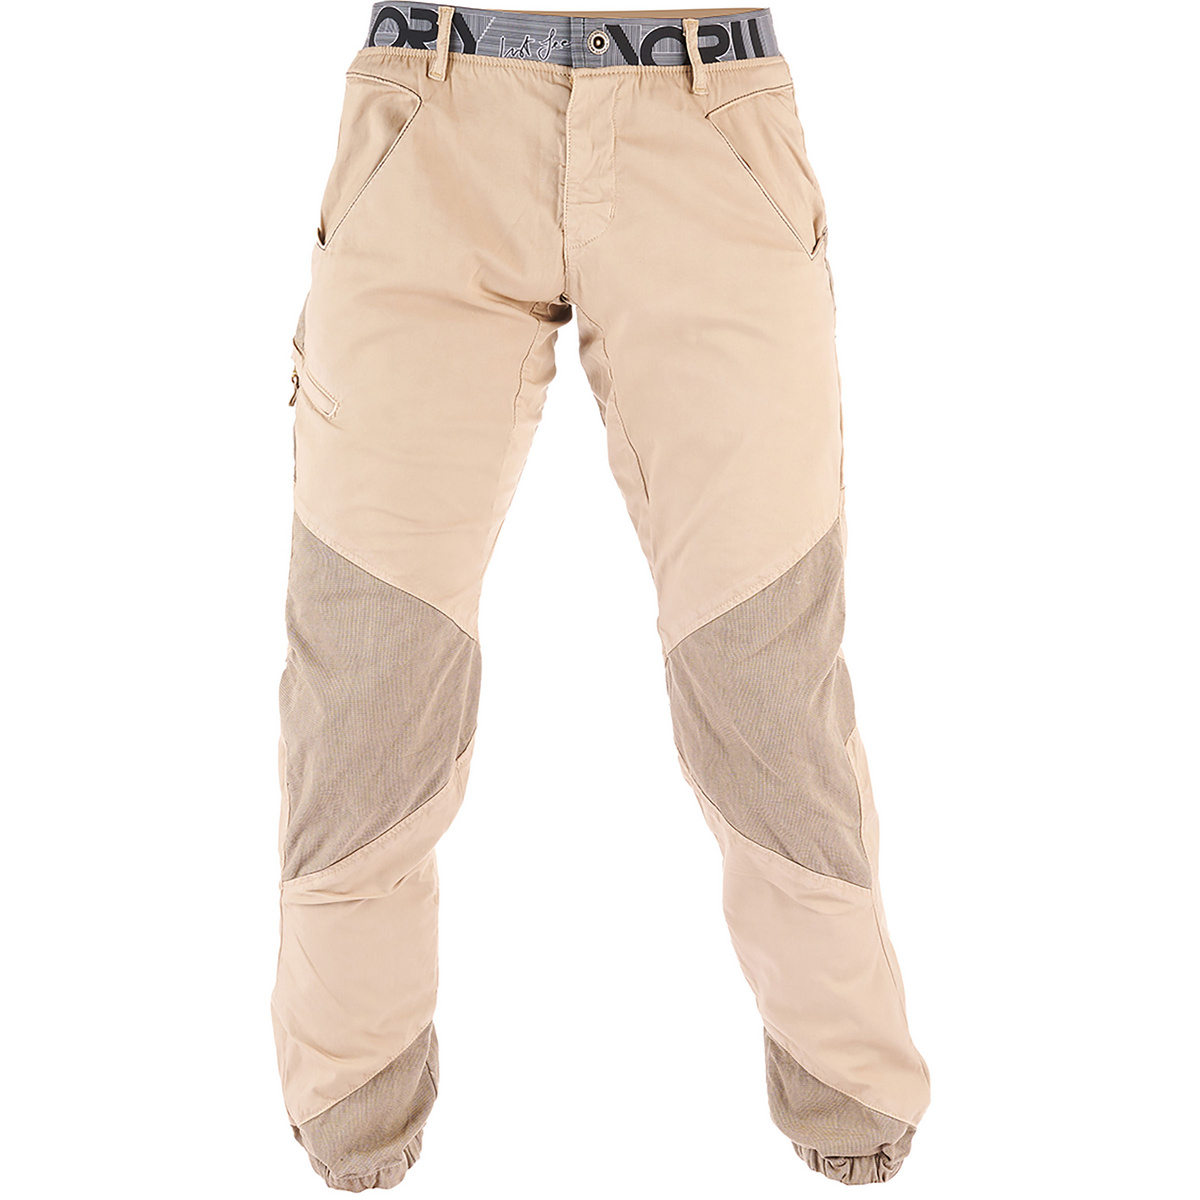 Image of Nograd Uomo Pantaloni Resistant Ultimate